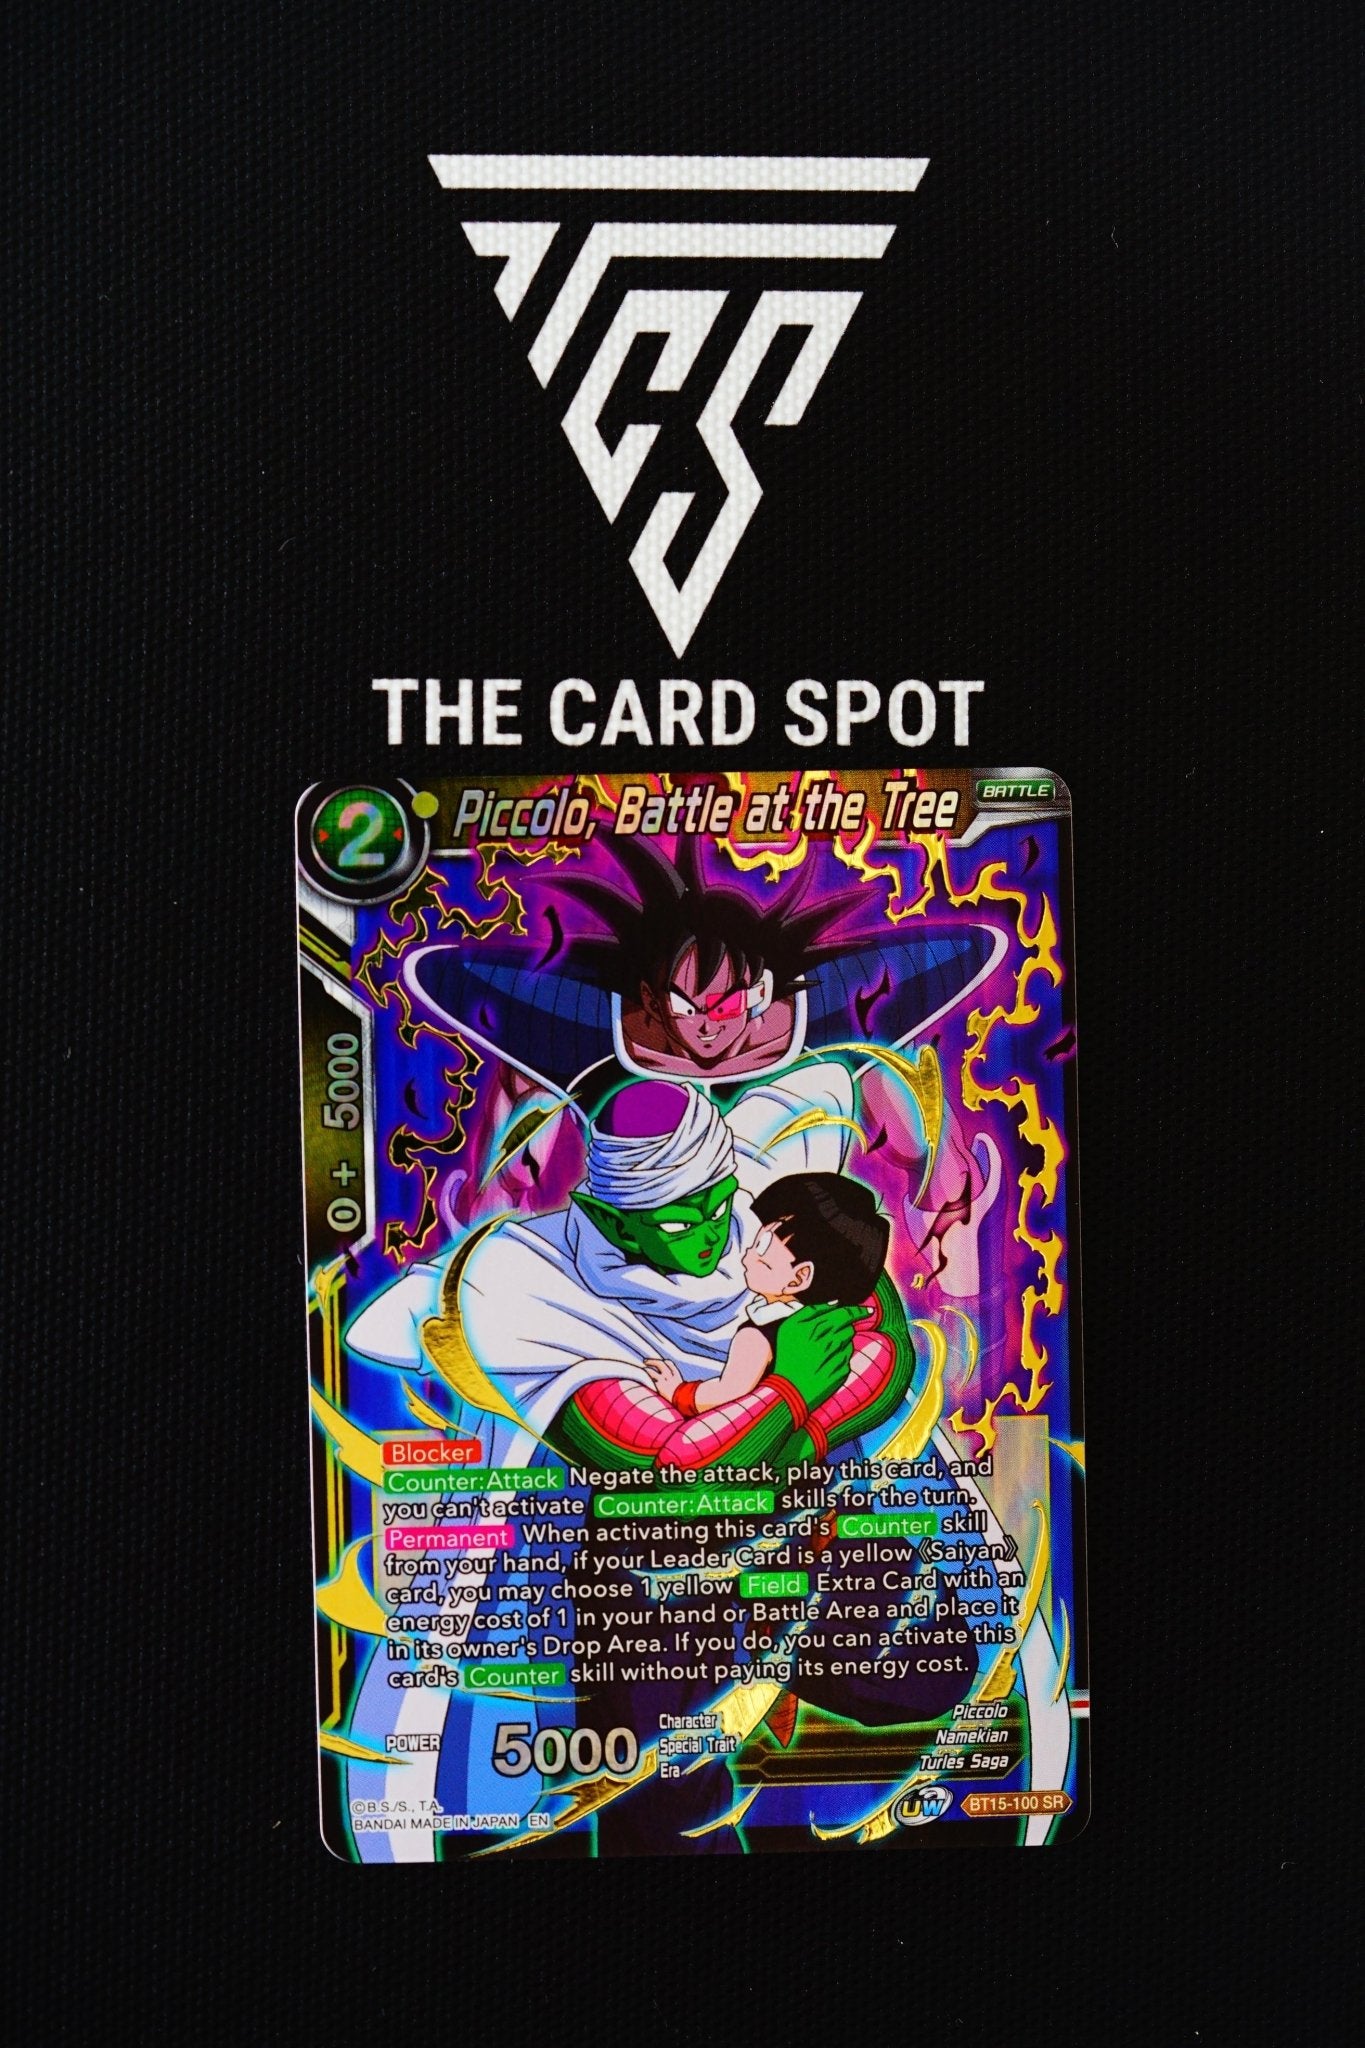 BT15-100 SR - Piccolo, Battle at the tree - Dragon Ball Card - THE CARD SPOT PTY LTD.Dragon Ball Single CardDragon Ball Super